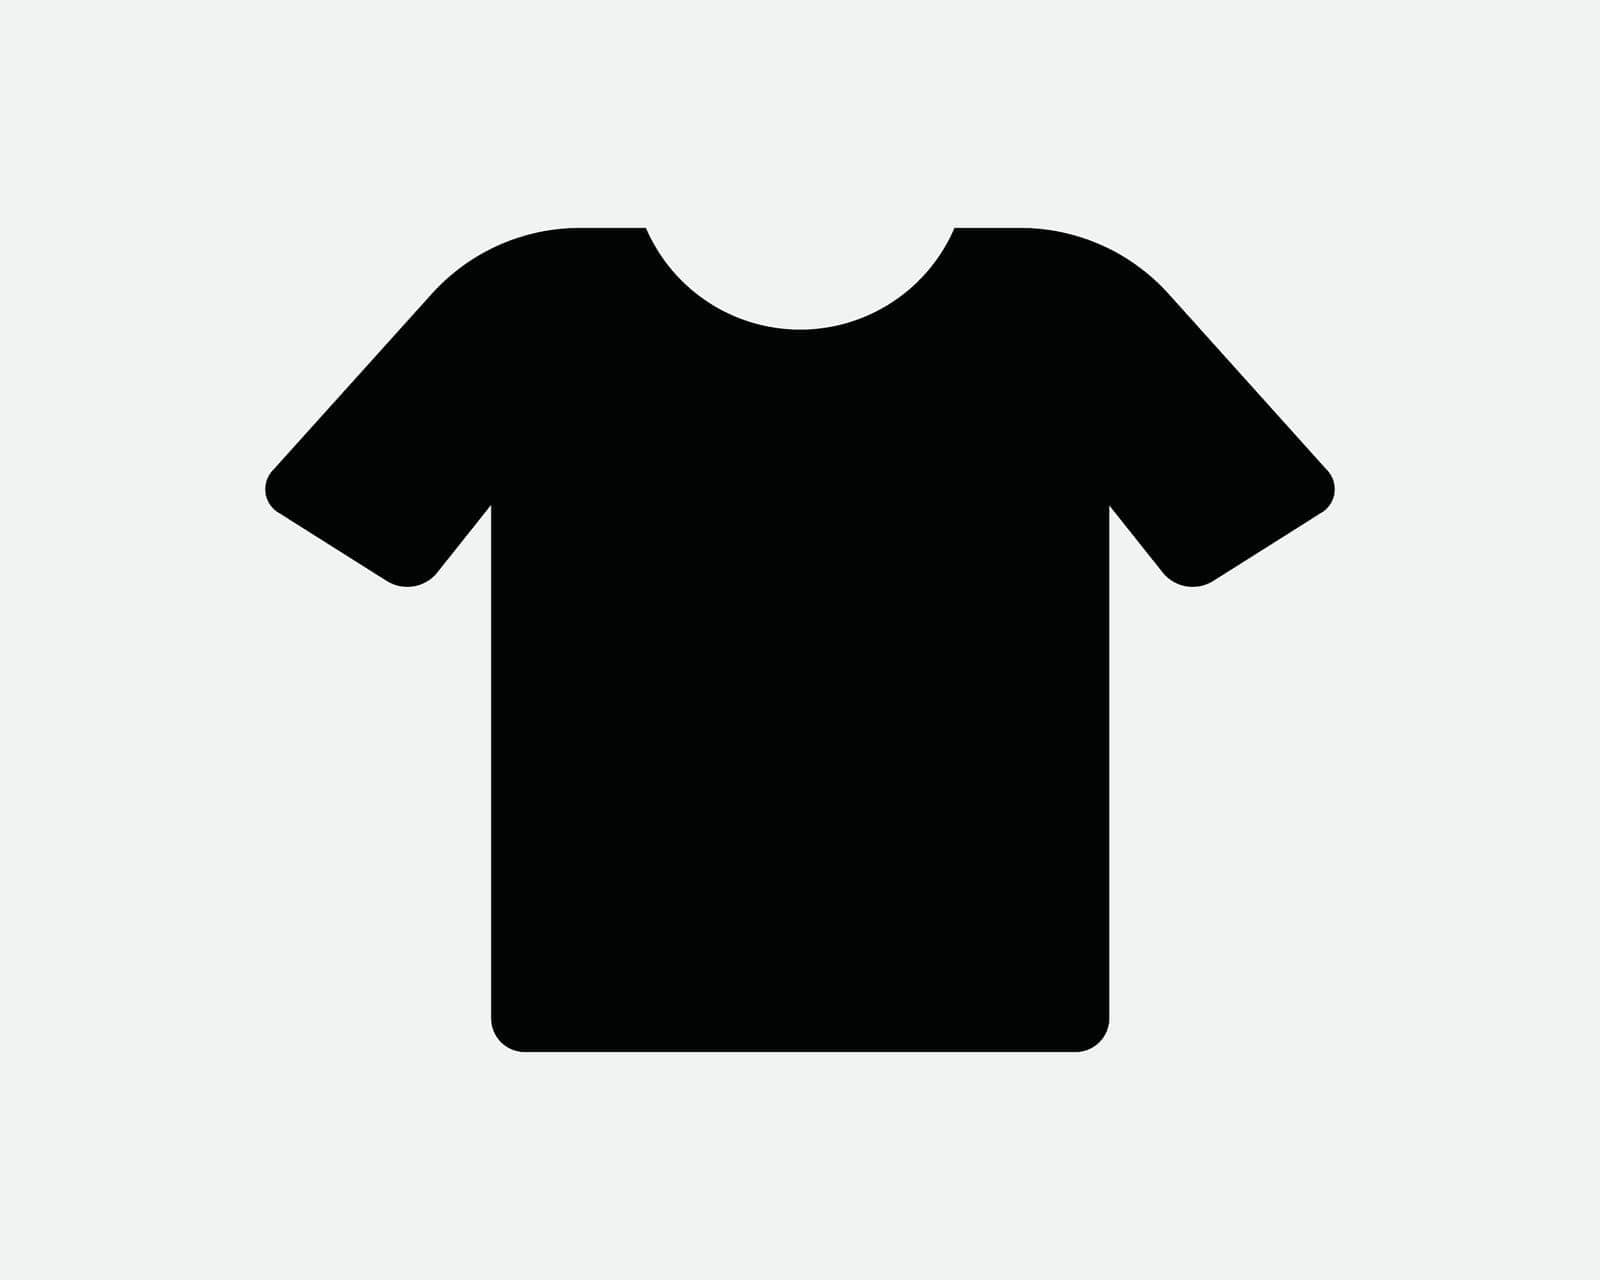 Shirt Icon. T-Shirt Clothe Fabric Fashion Apparel Tee Clothing. Simple Black White Sign Symbol Shape Illustration Artwork Graphic Clipart EPS Vector